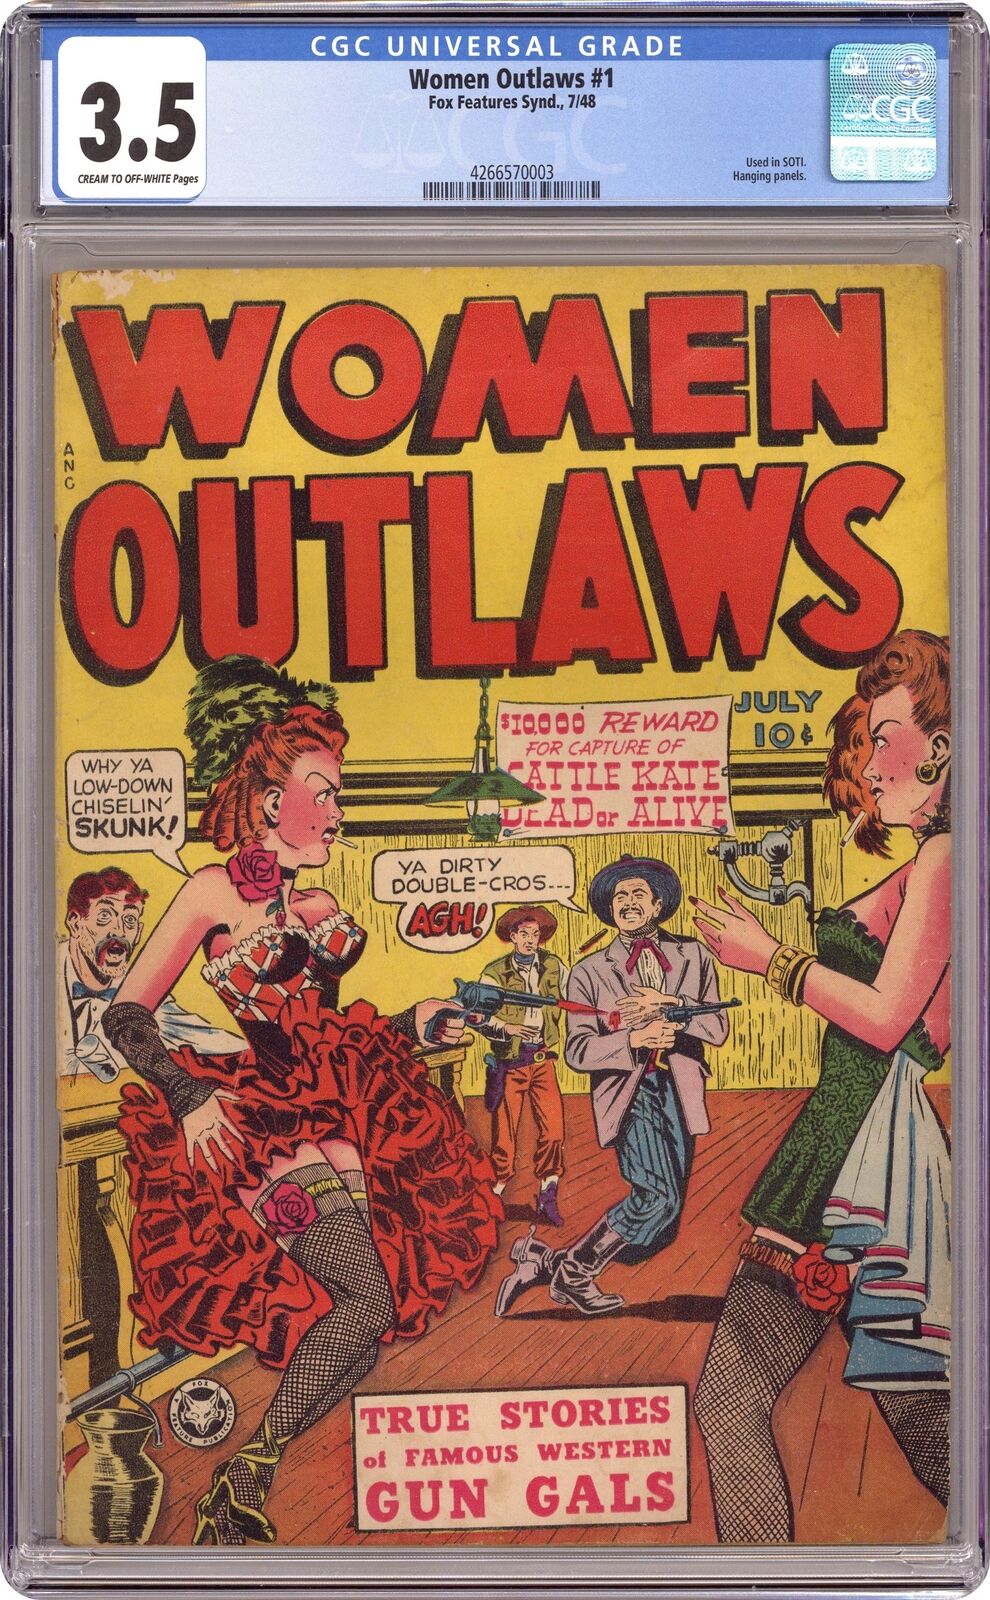 Women Outlaws #1 CGC 3.5 1948 4266570003